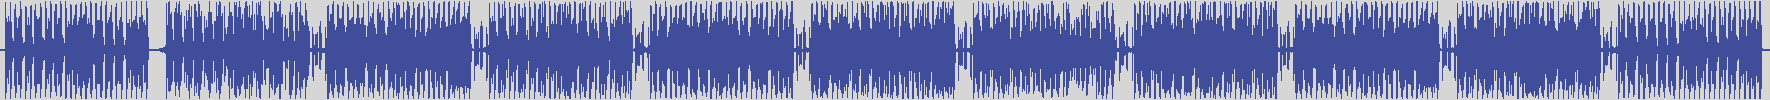 nf_boyz_records [NFY001] Andrew Waxmann - Good Conduct [Glitter Life Mix] audio wave form